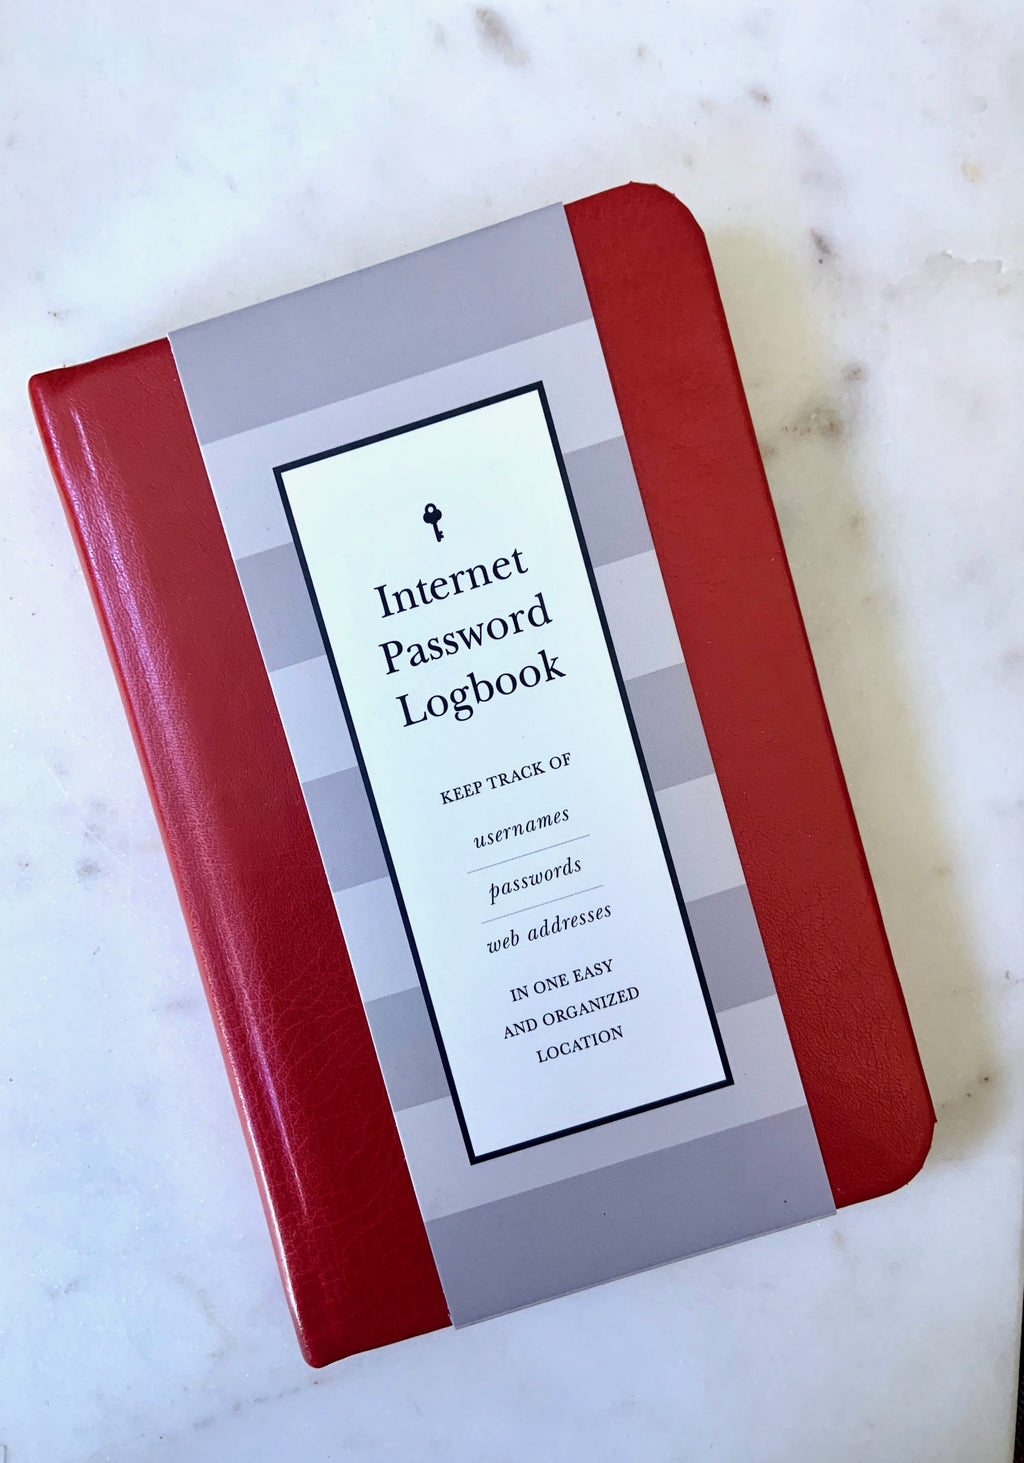 Internet Password Book